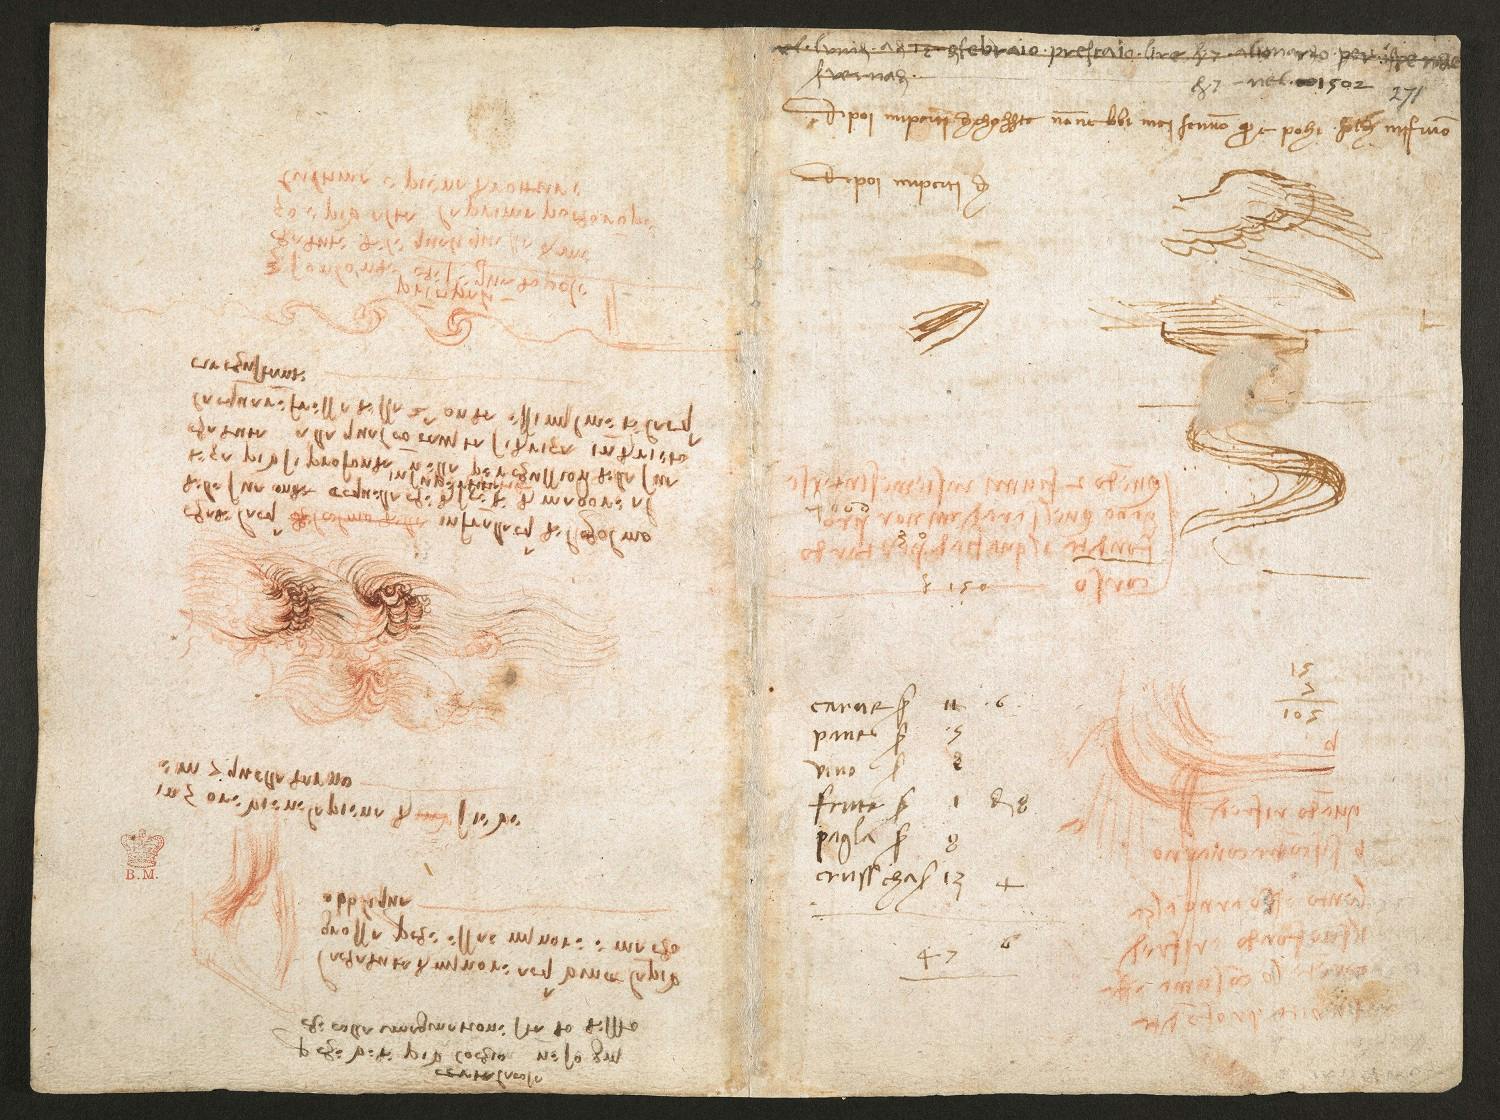 Water as Microscope of Nature. Leonardo da Vinci’s Codex Leicester